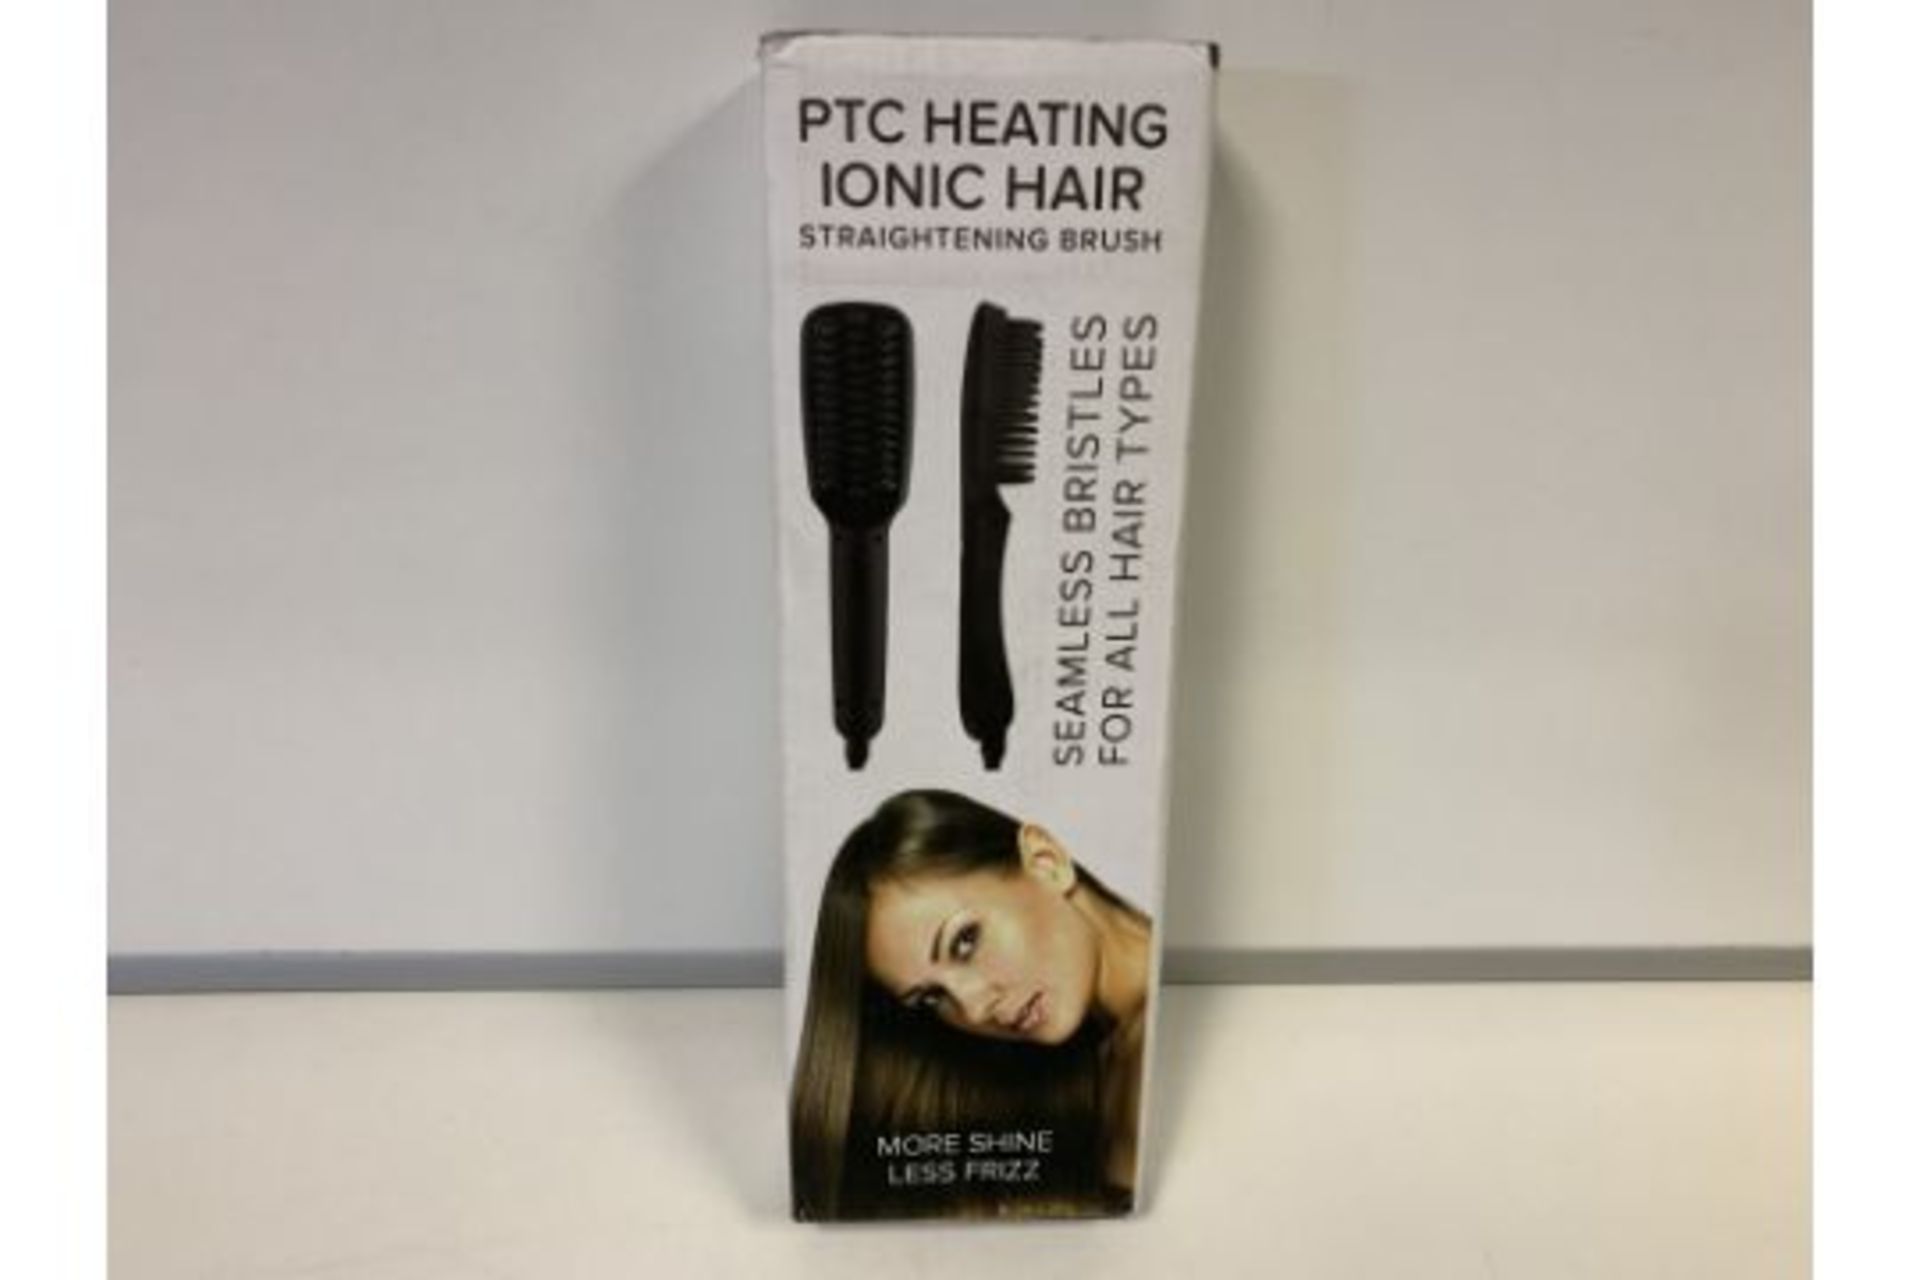 16 X NEW BOXED PTC HEATING IONIC HAIR STRAIGHTENING BRUSHES. RRP £24.99 EACH